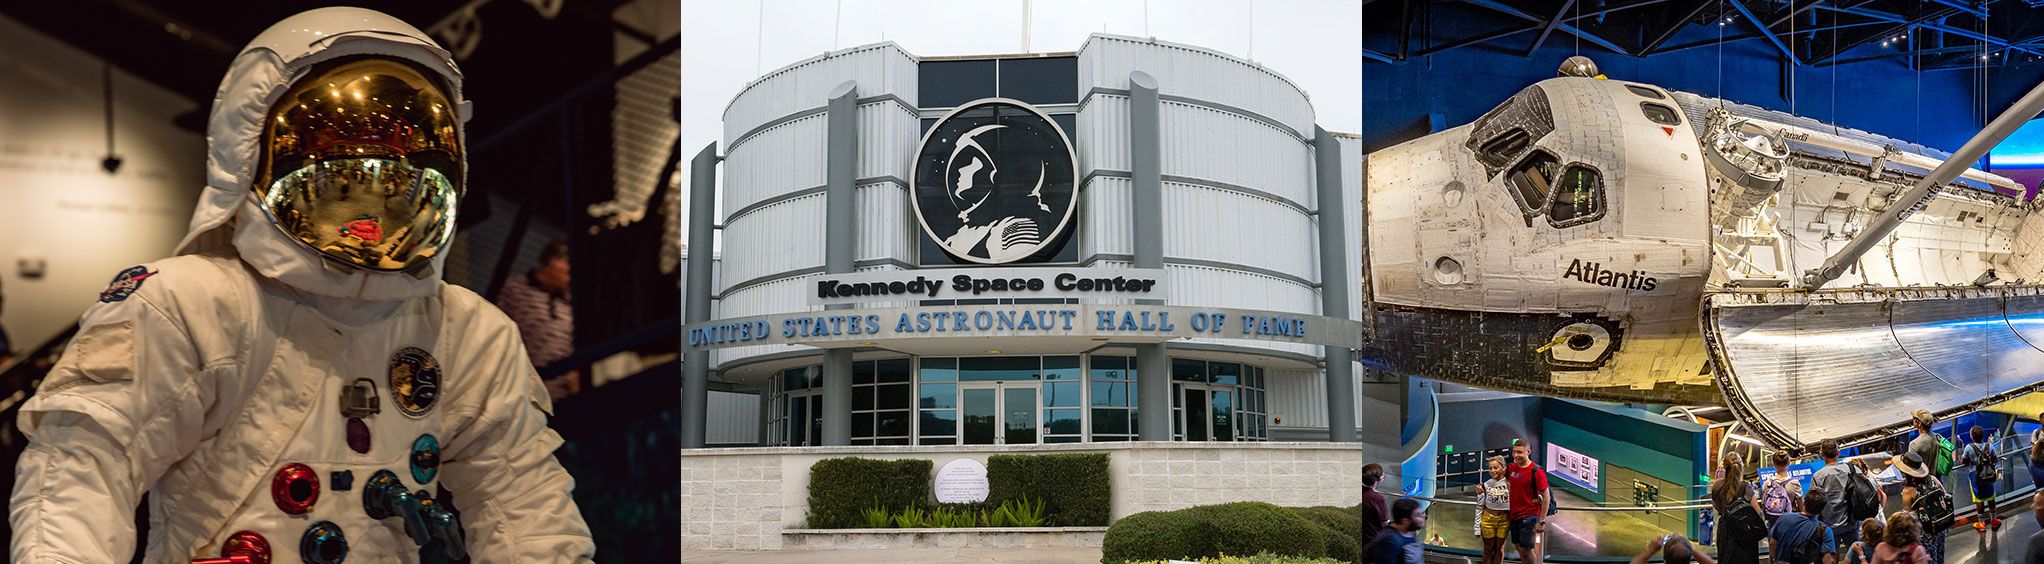 Kennedy Space Center near Orlando, FL